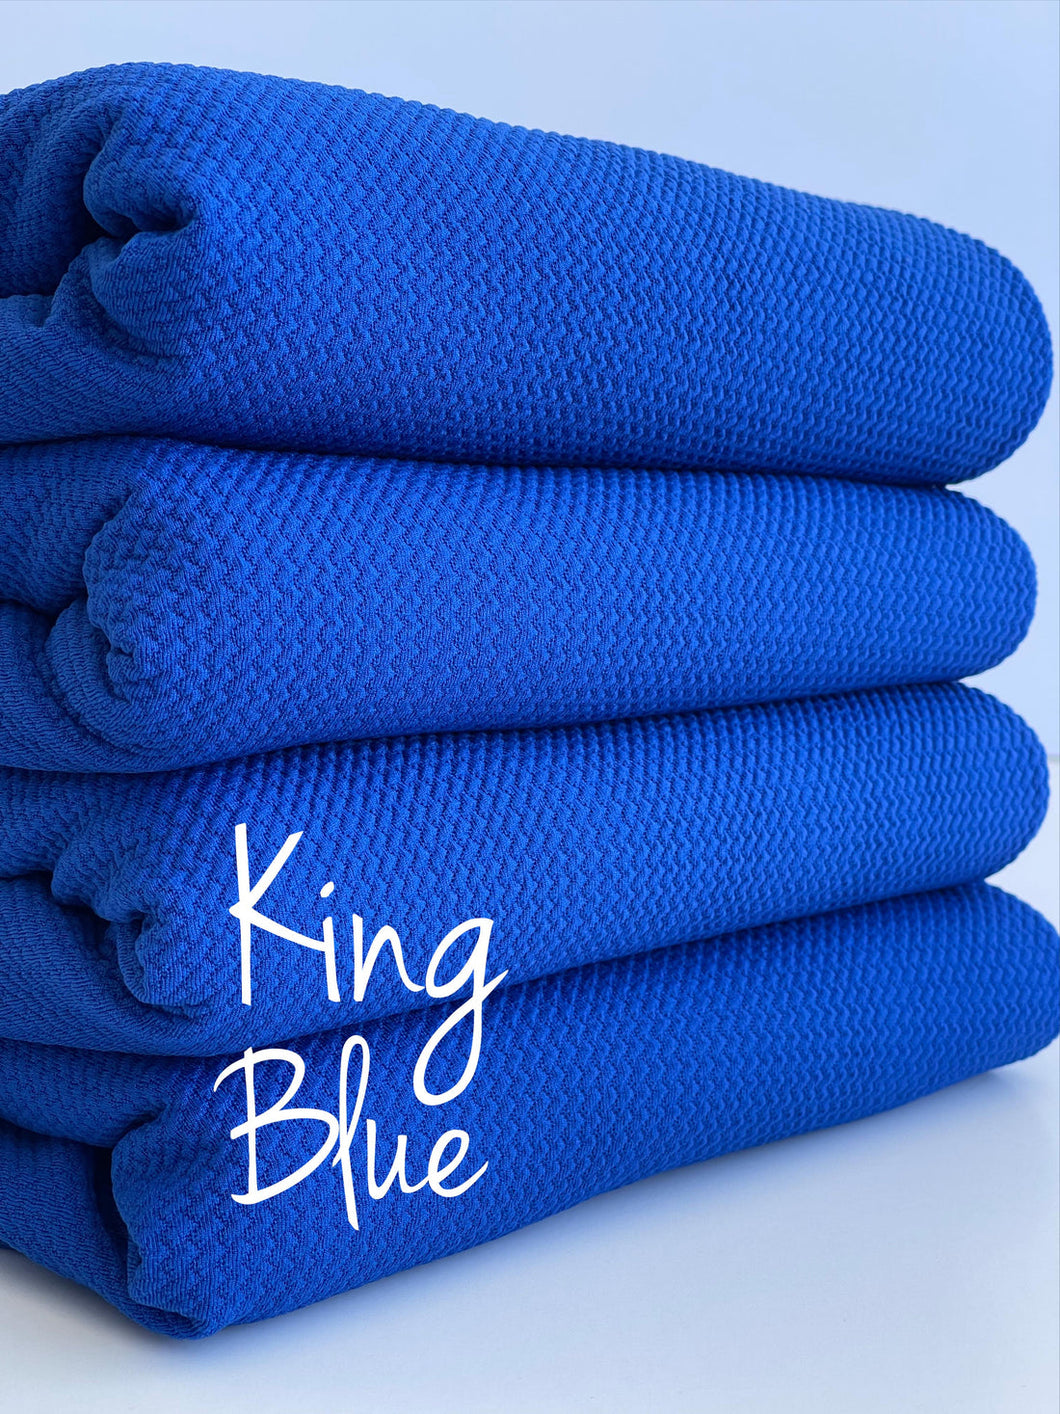 King Blue